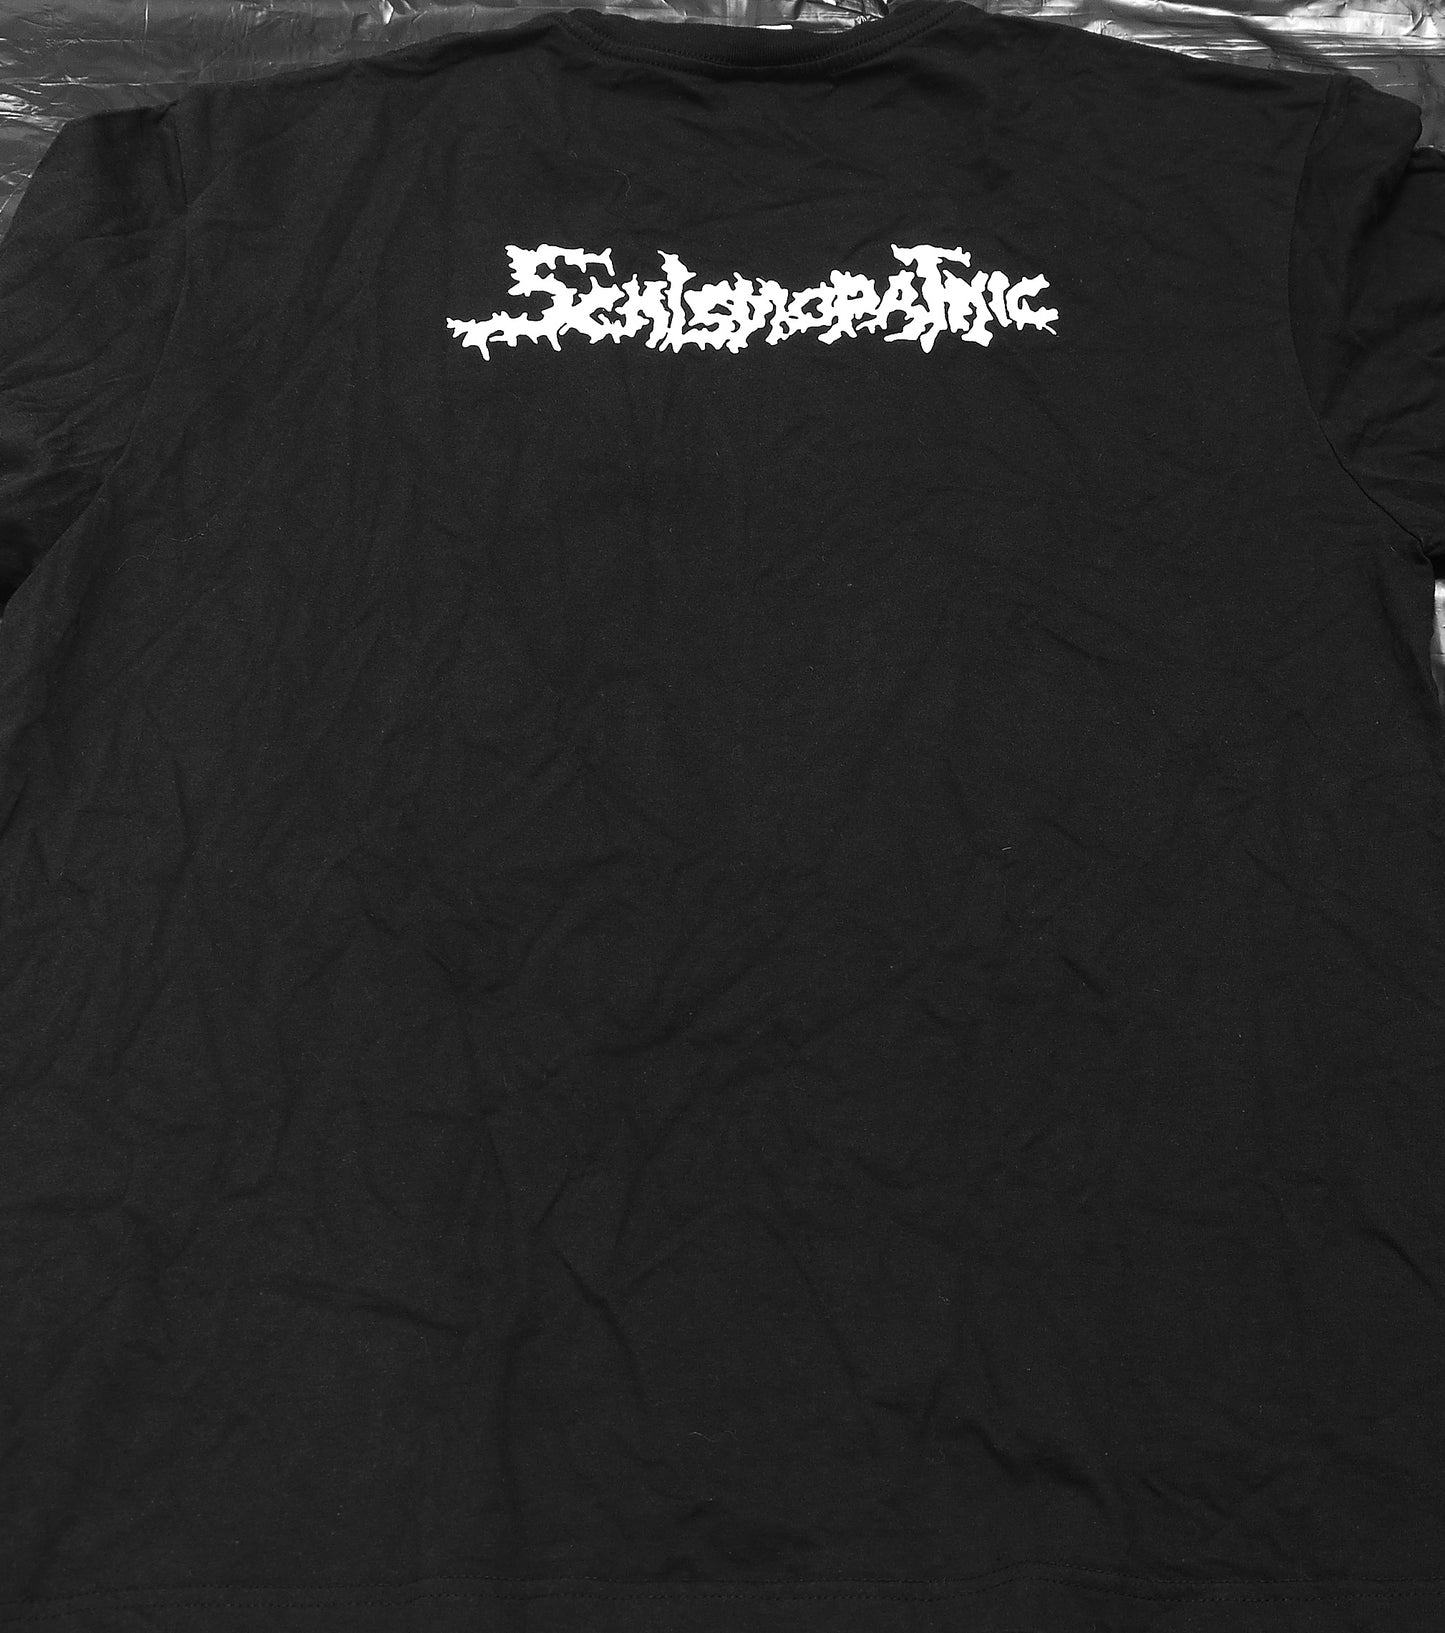 SCHISMOPATHIC - T-shirt